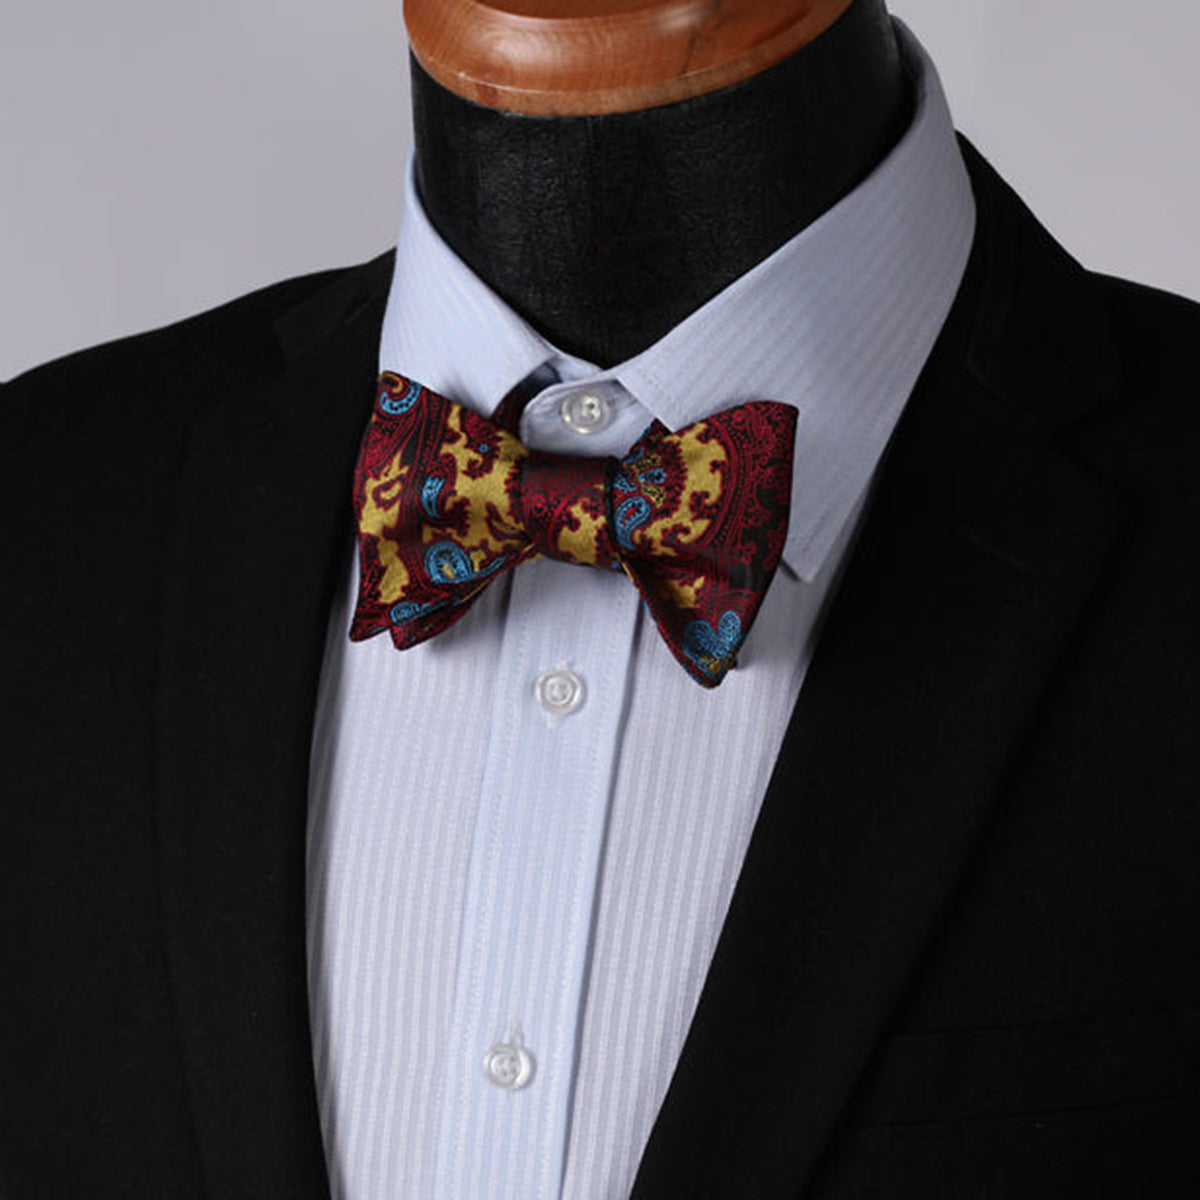 Multicolor Paisley Mens Silk Self tie Bow Tie with Pocket Squares Set - Amedeo Exclusive